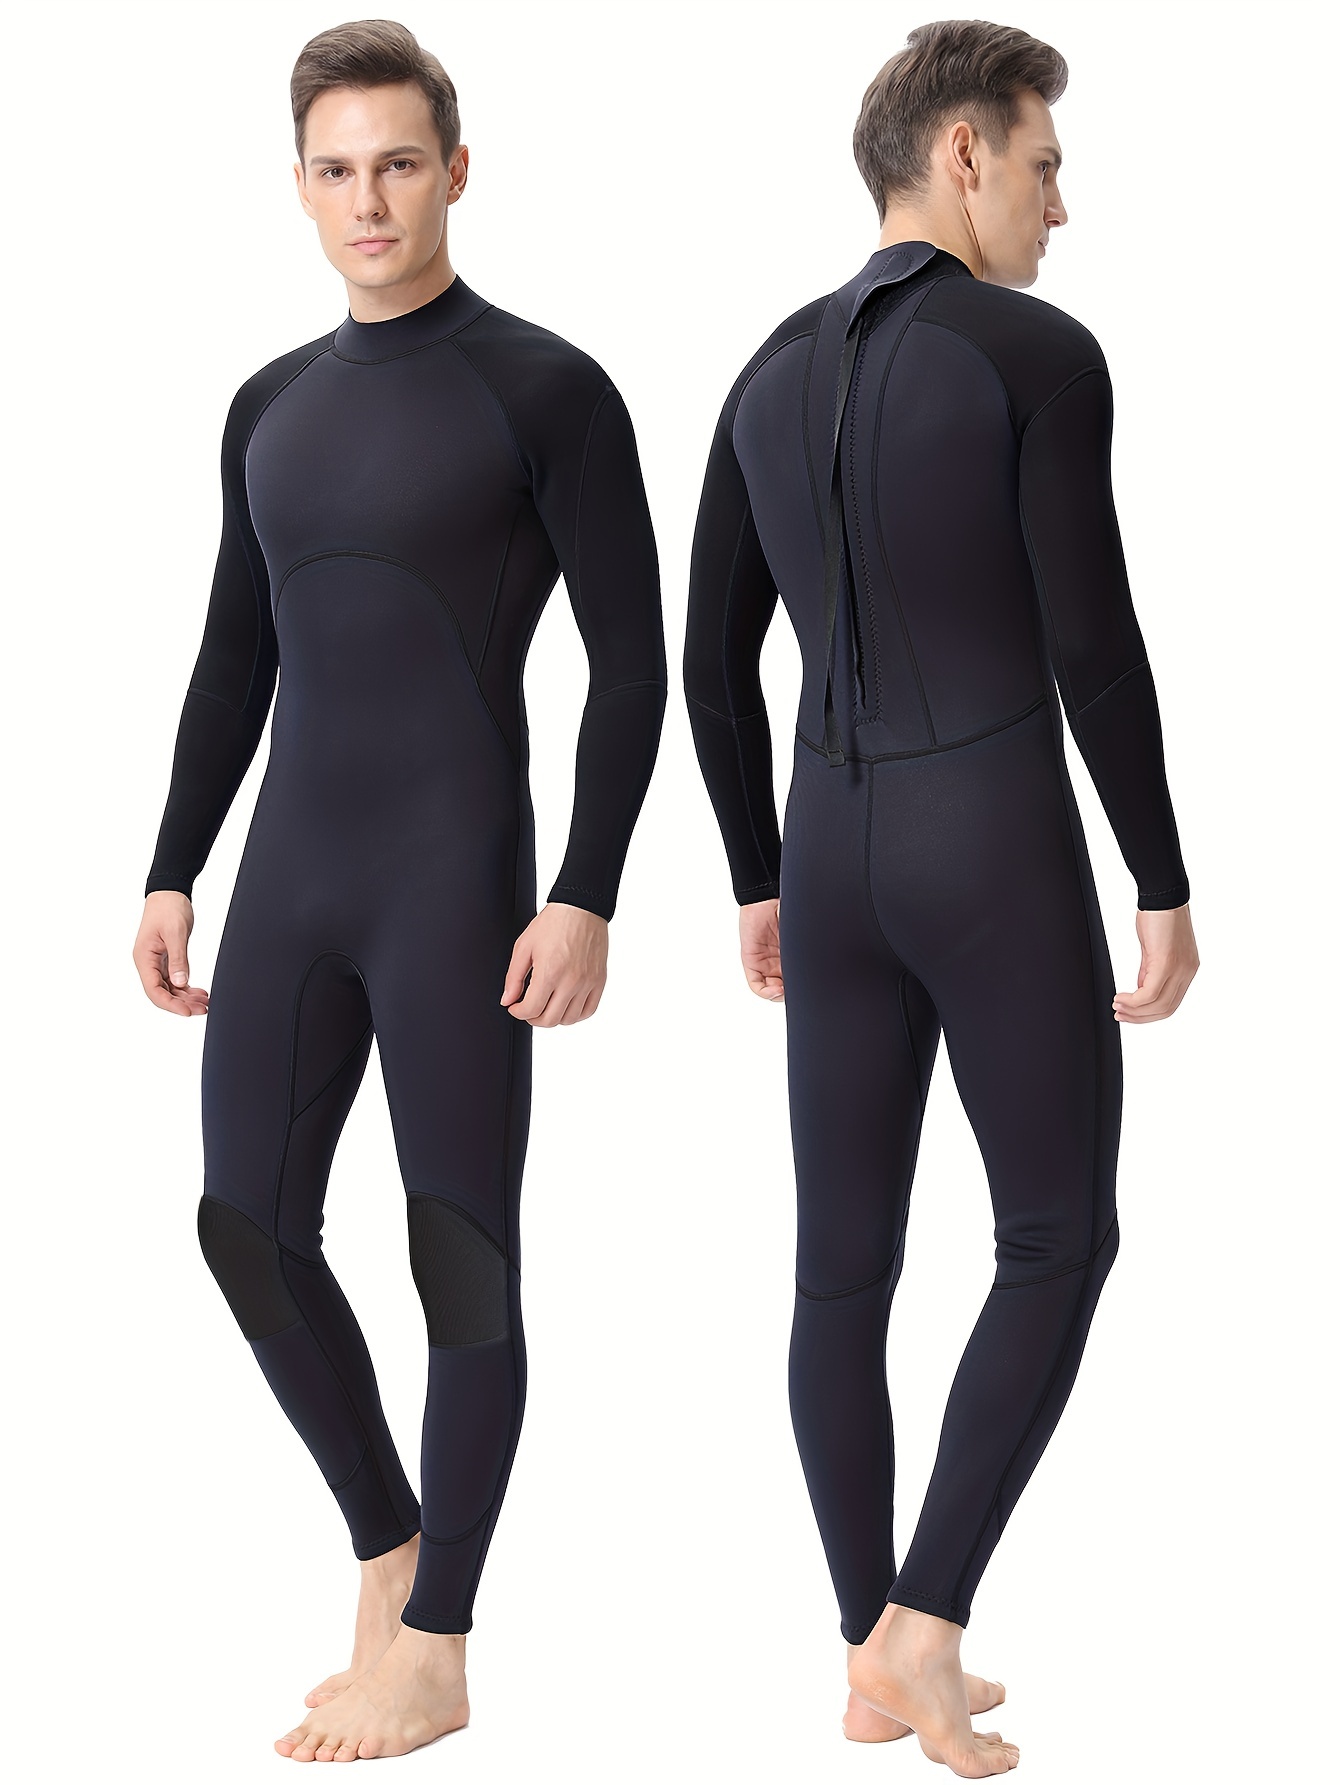 Mens Wetsuit Pants 2mm Tight Trousers Leggings for Swimming Canoe Kayak